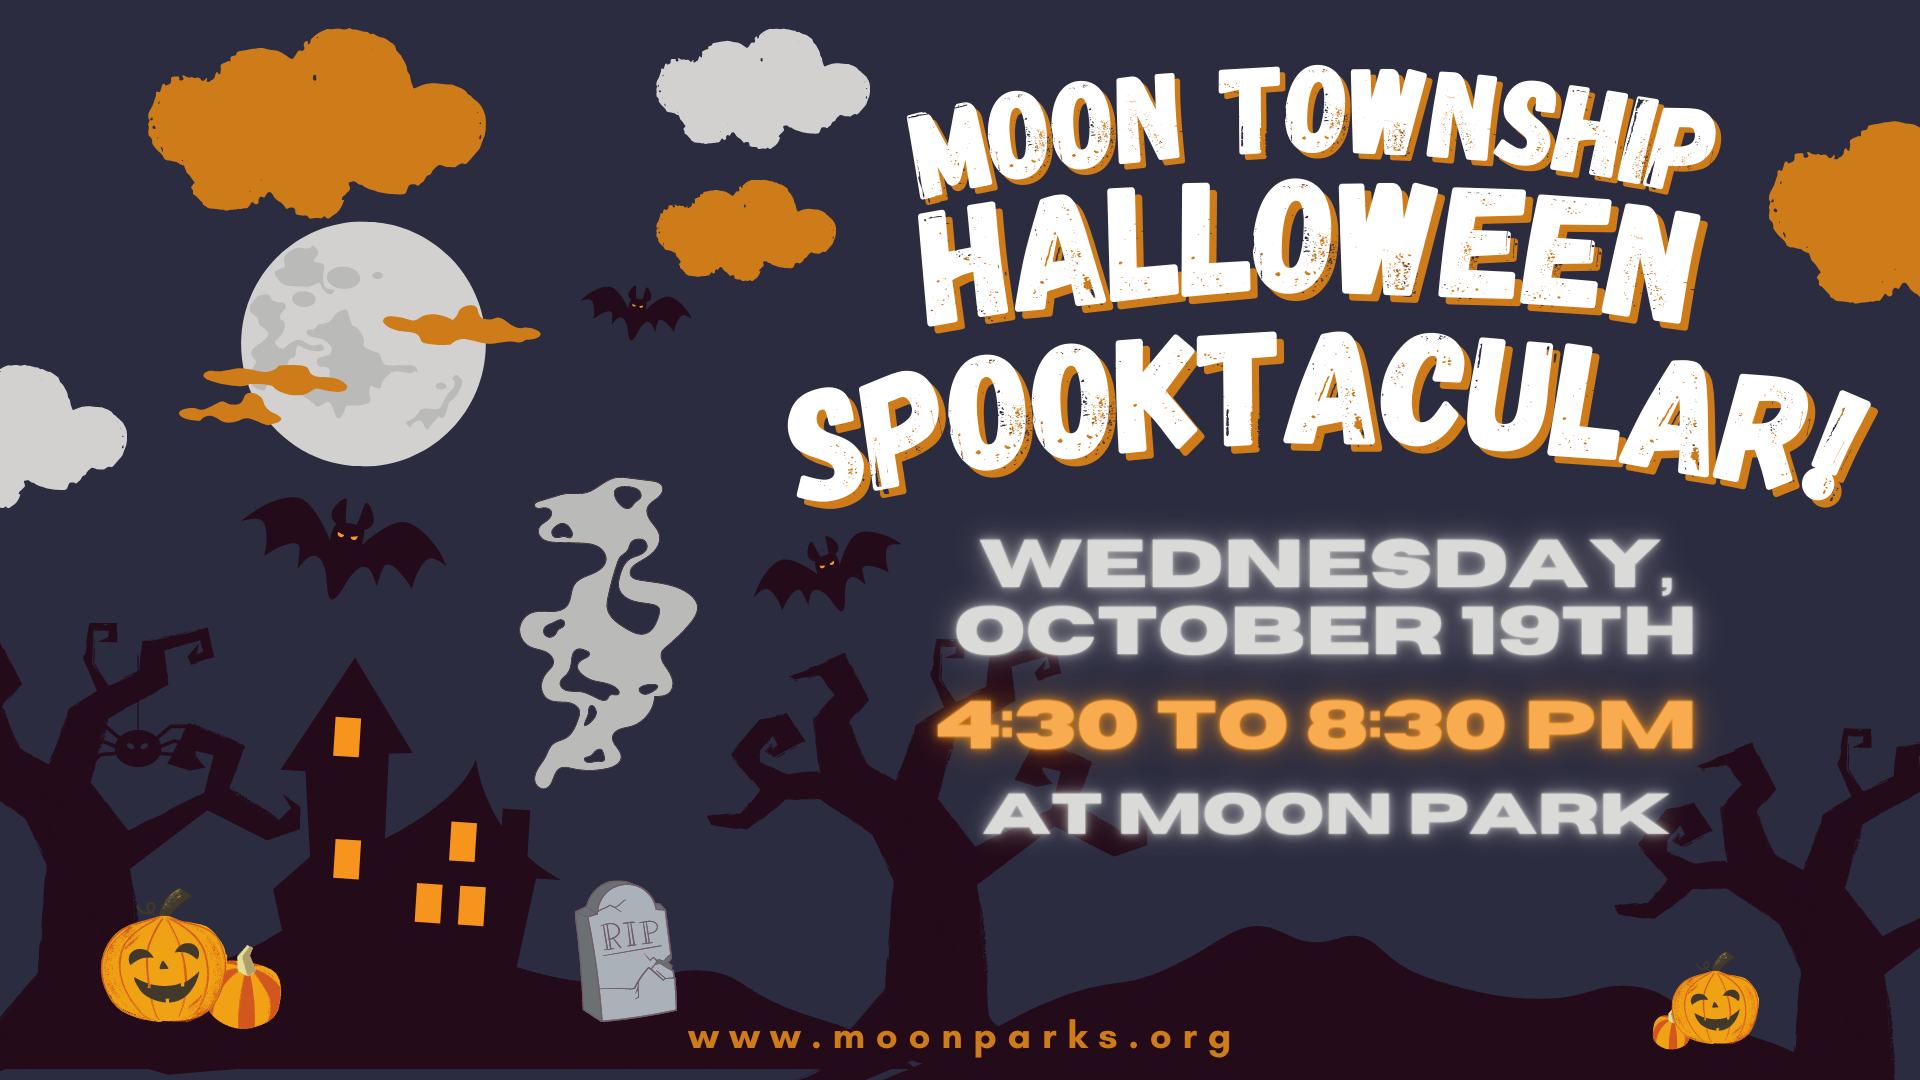 Moon Halloween Spooktacular Southwestern Pennsylvania Guide